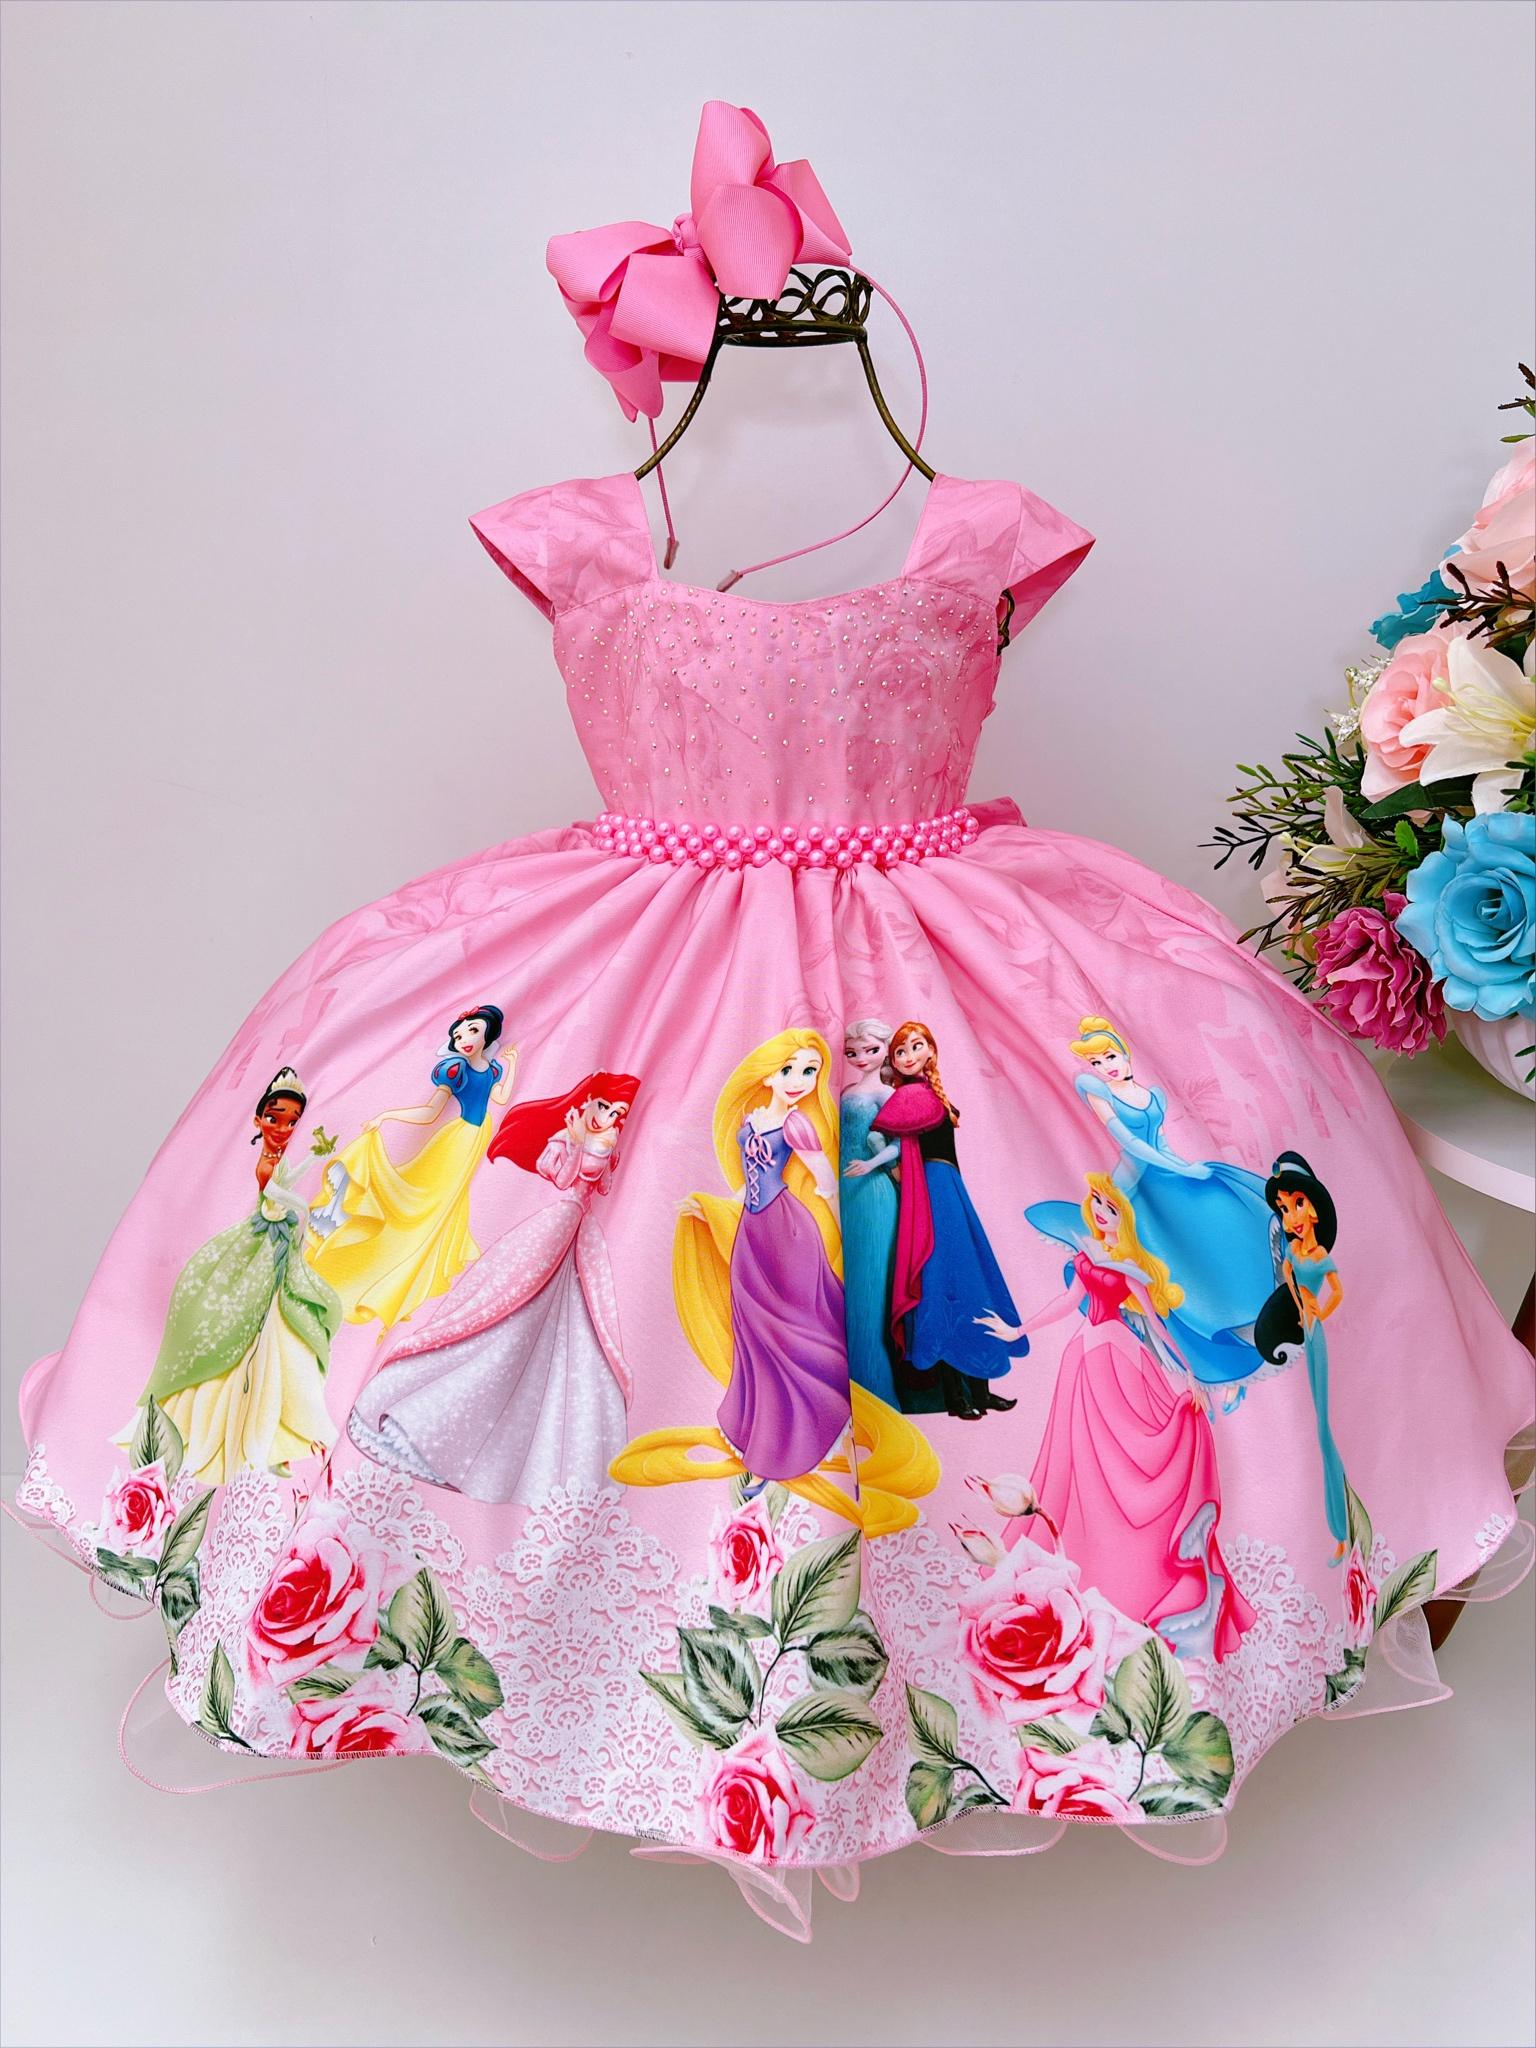 Vestido Infantil Princesas Rosa Cinto de Pérolas Luxo